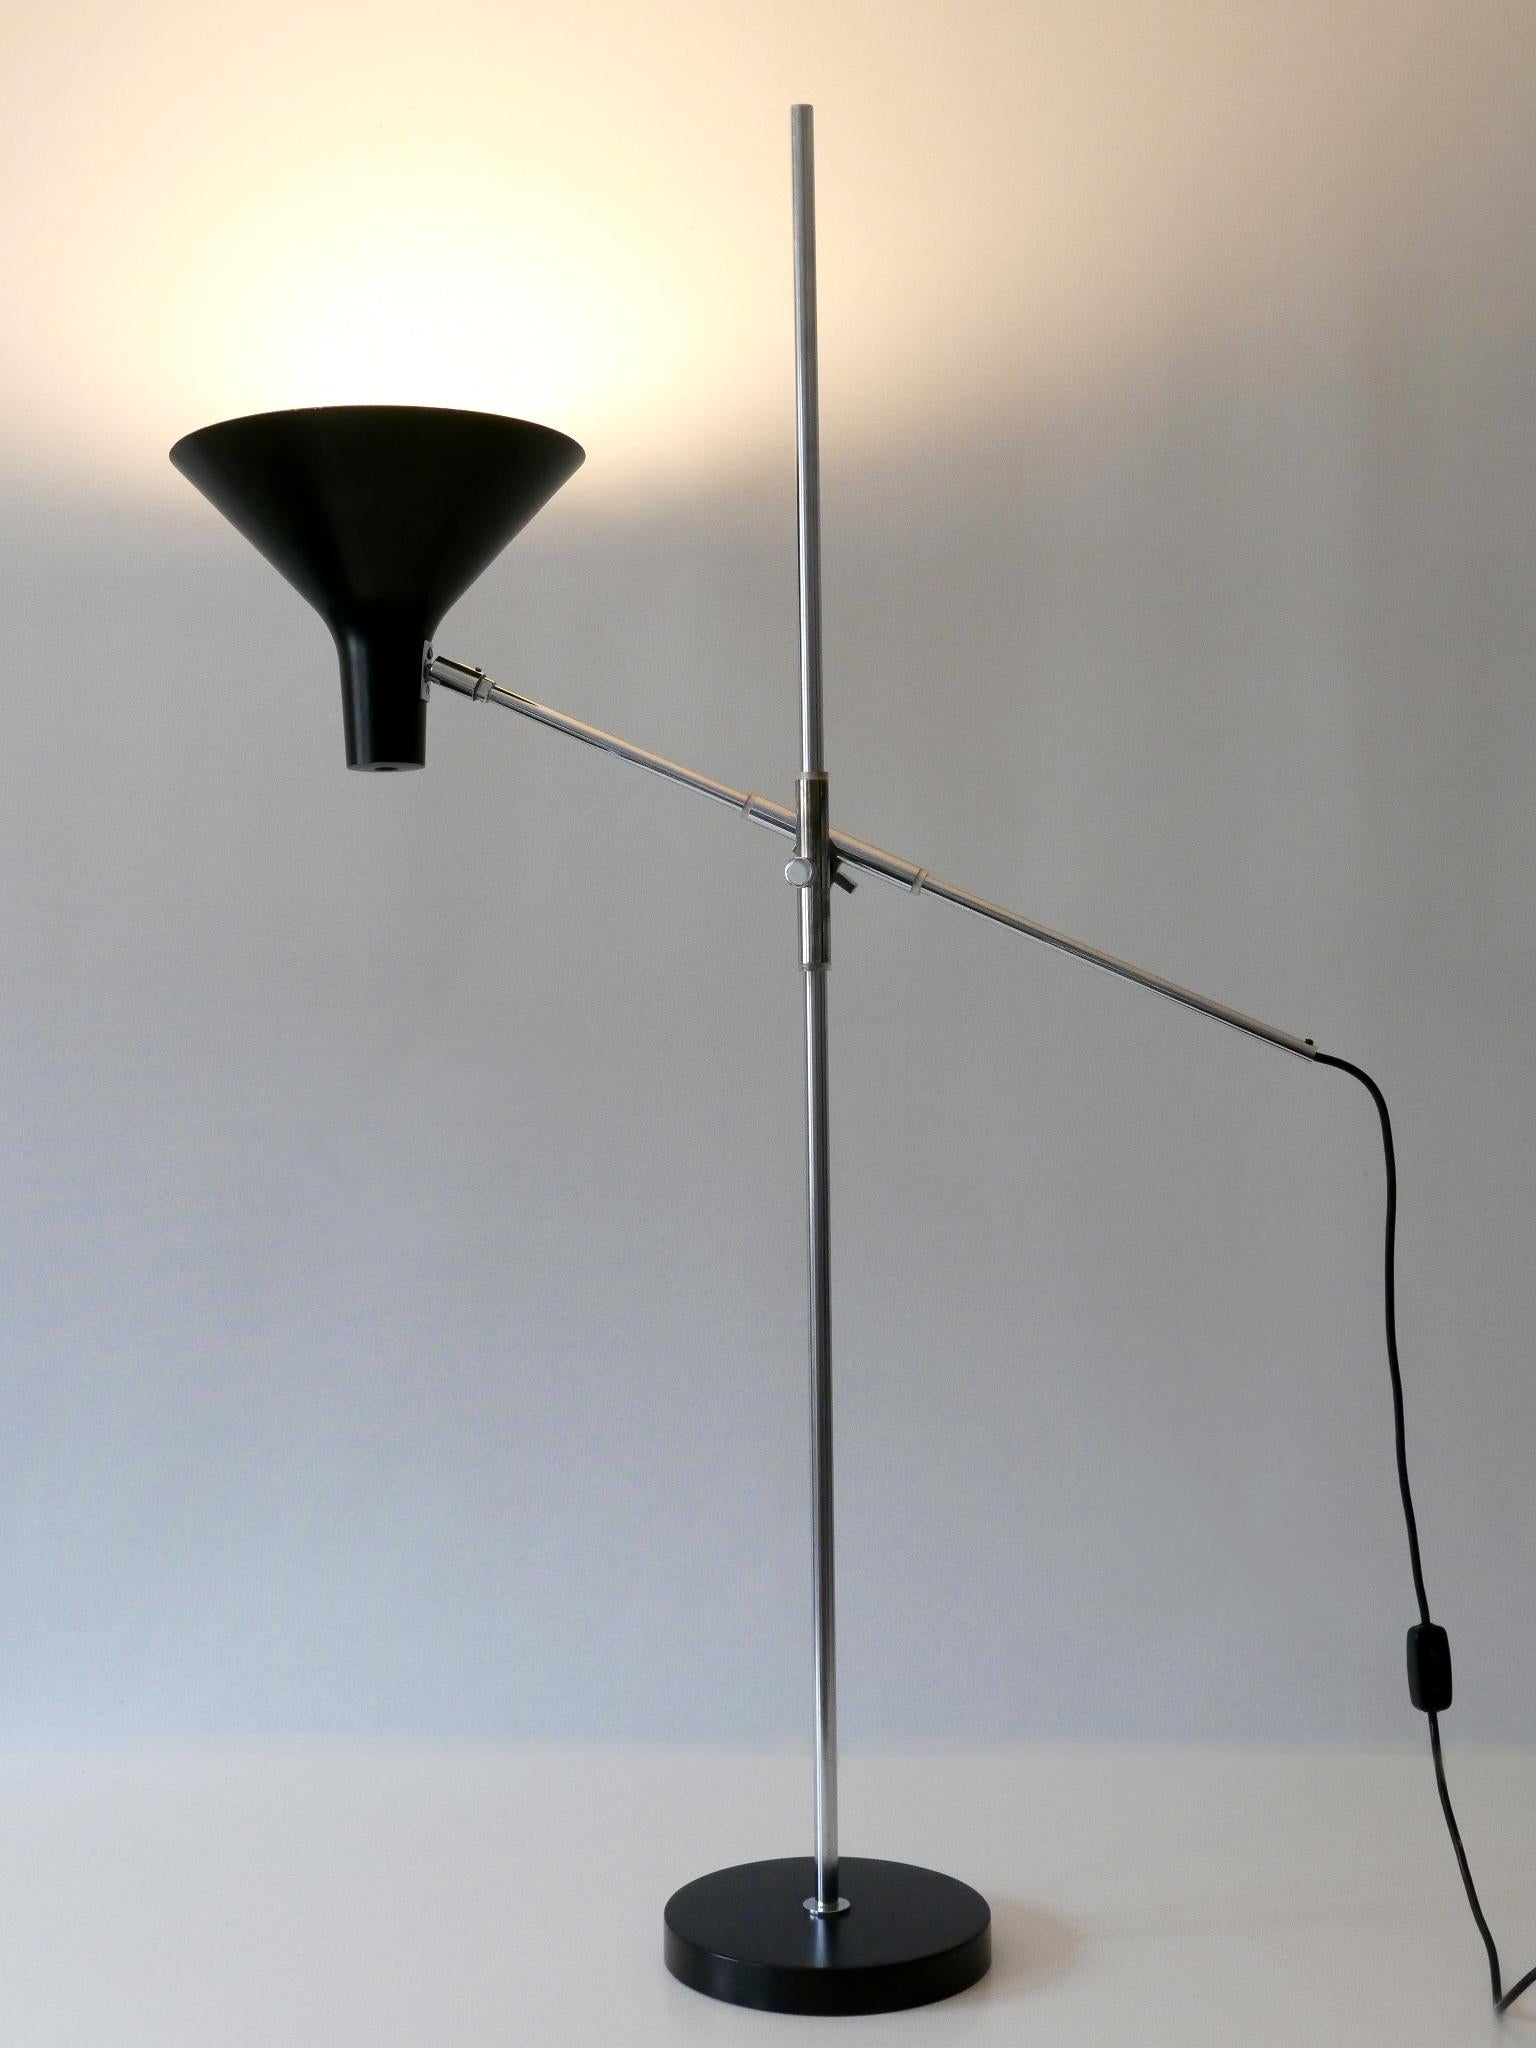 Rare & elegant Mid-Century Modern adjustable floor lamp or reading light Nr 8180. Designed by Karl-Heinz Kinsky, 1962. Manufactured by Gebrüder Cosack, Neheim-Hüsten, Germany, 1960s.

Executed in partly black enameled aluminium sheet and